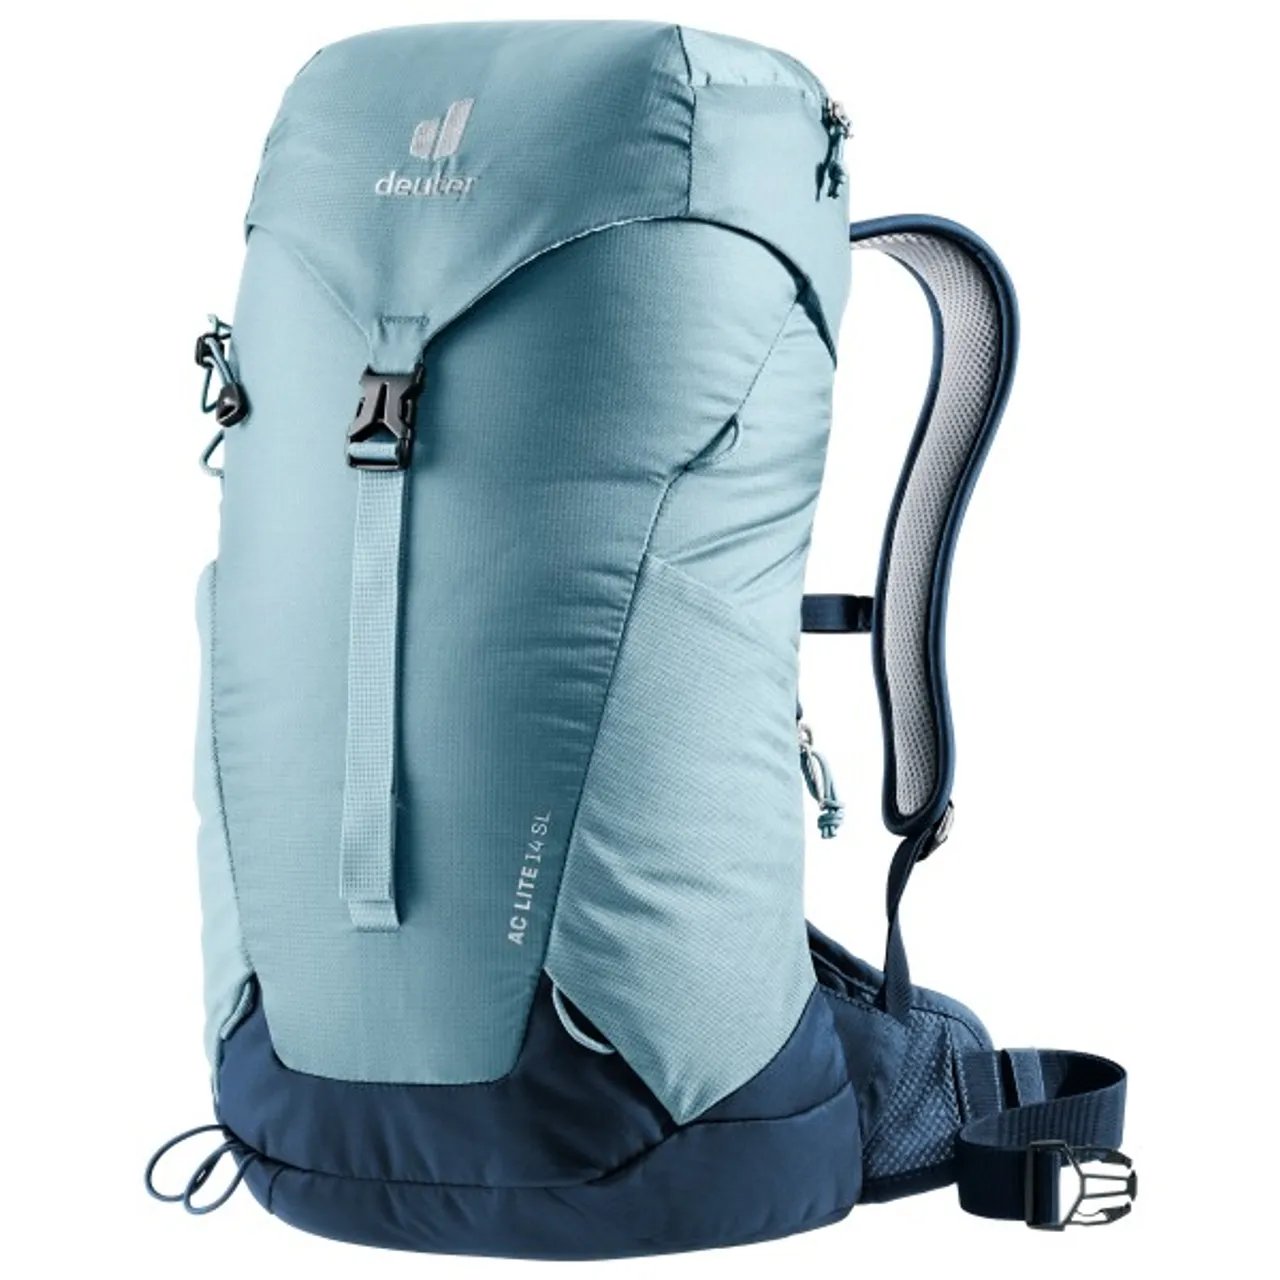 Deuter - Women's AirComfort Lite 14 SL - Walking backpack size 14 l, blue